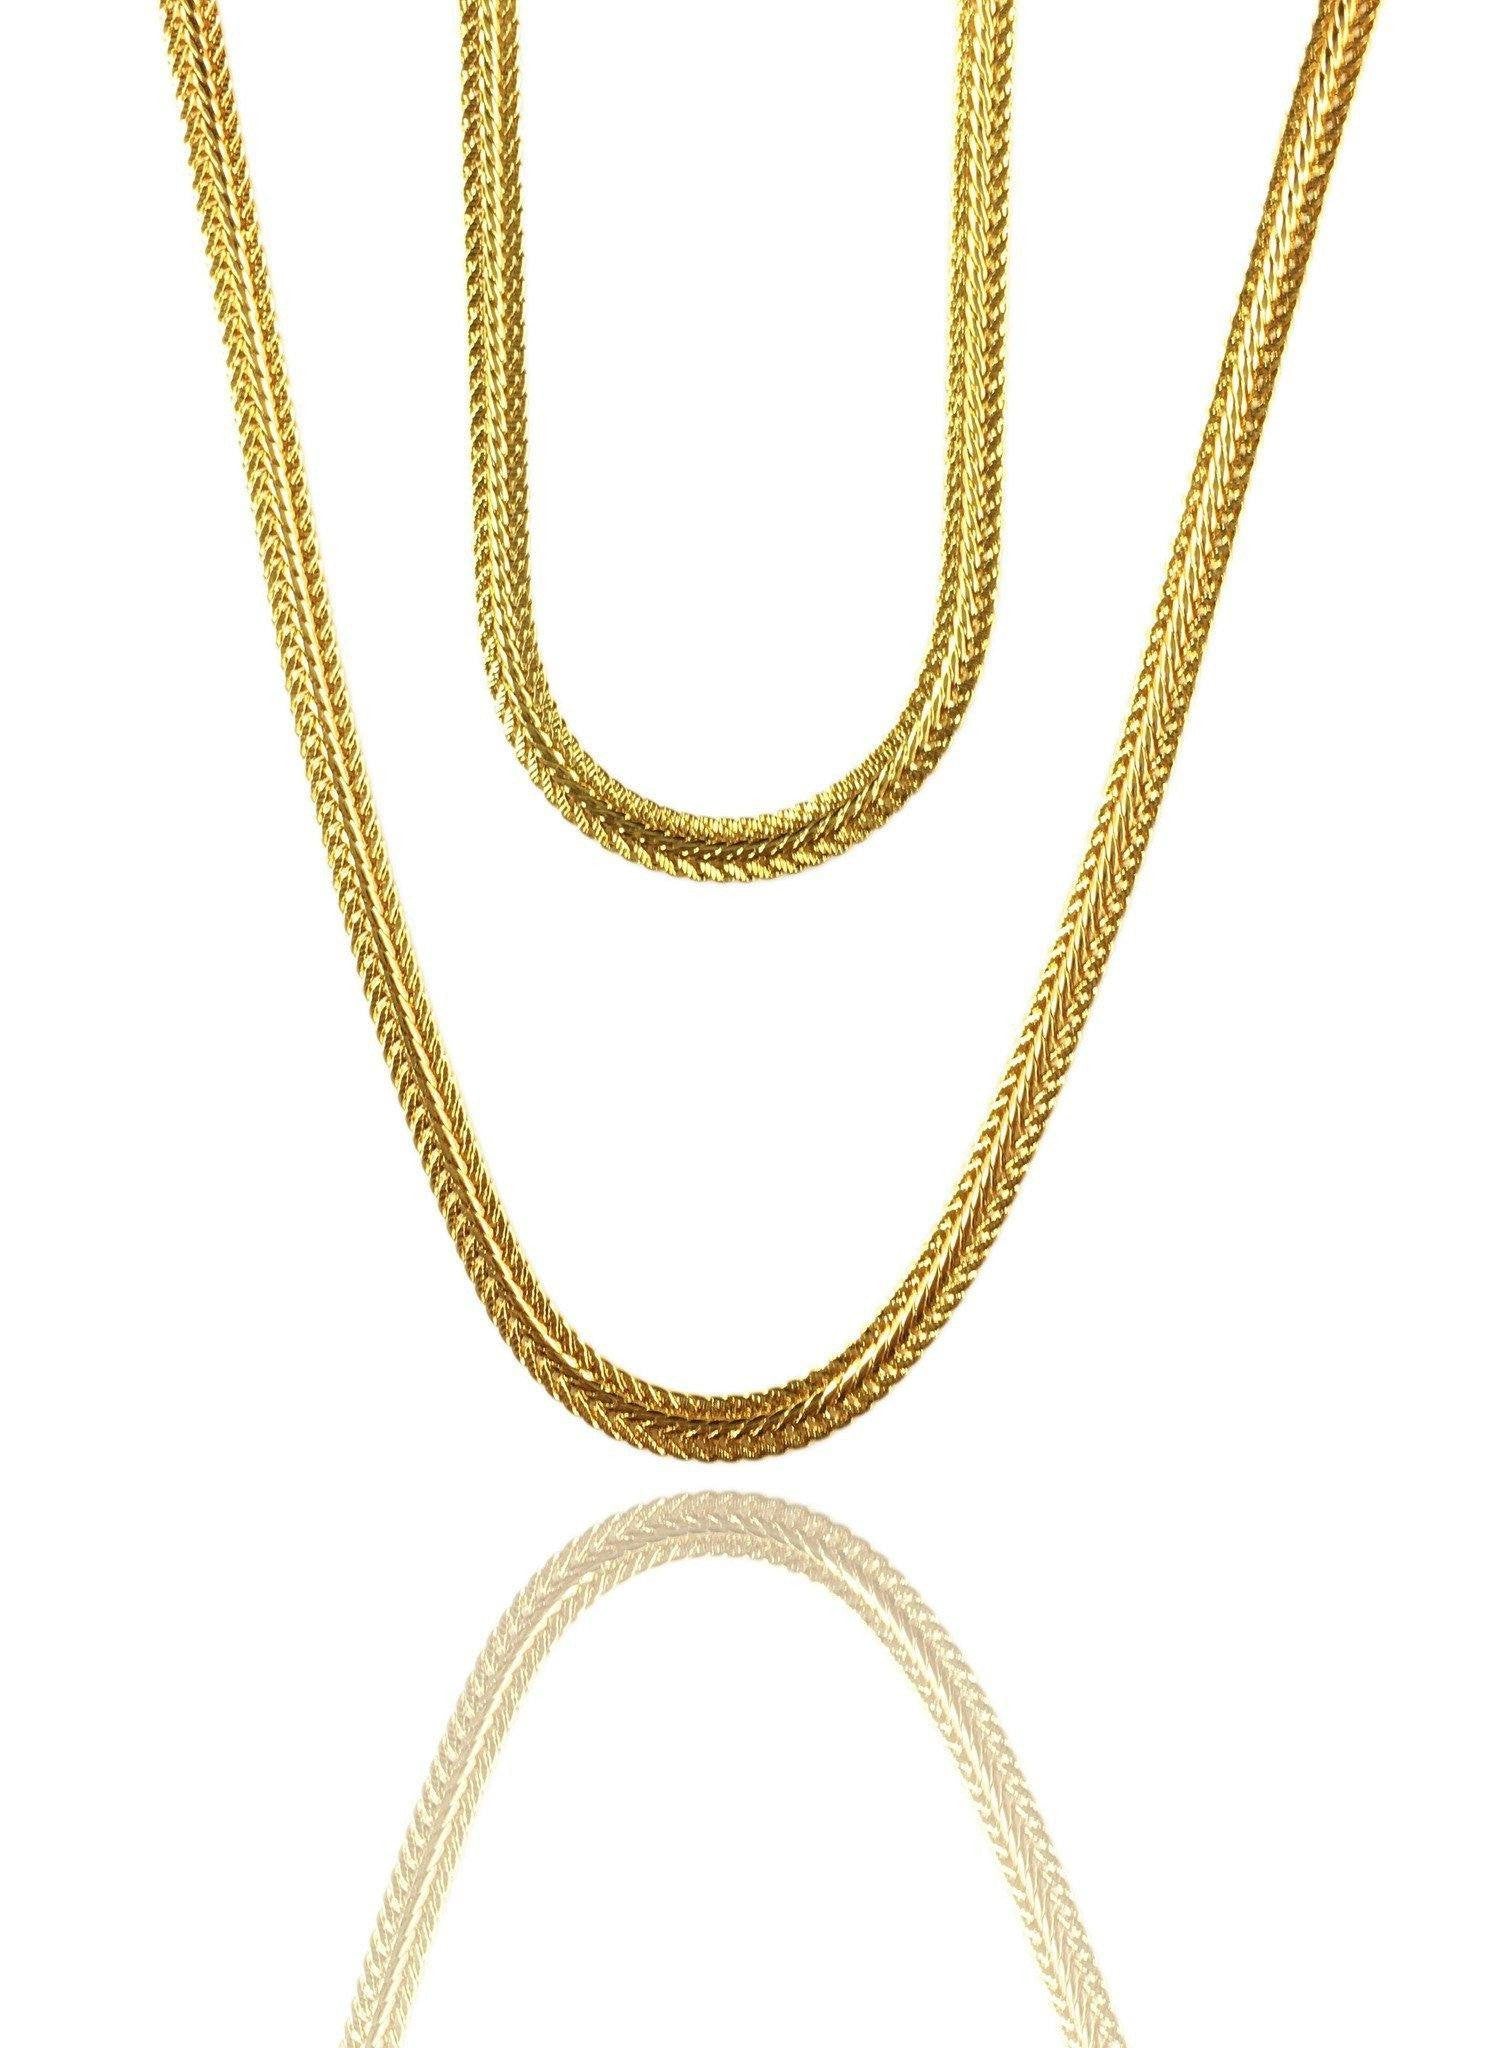 Necklace - Serpentine Chains Layered Set X 18k Gold